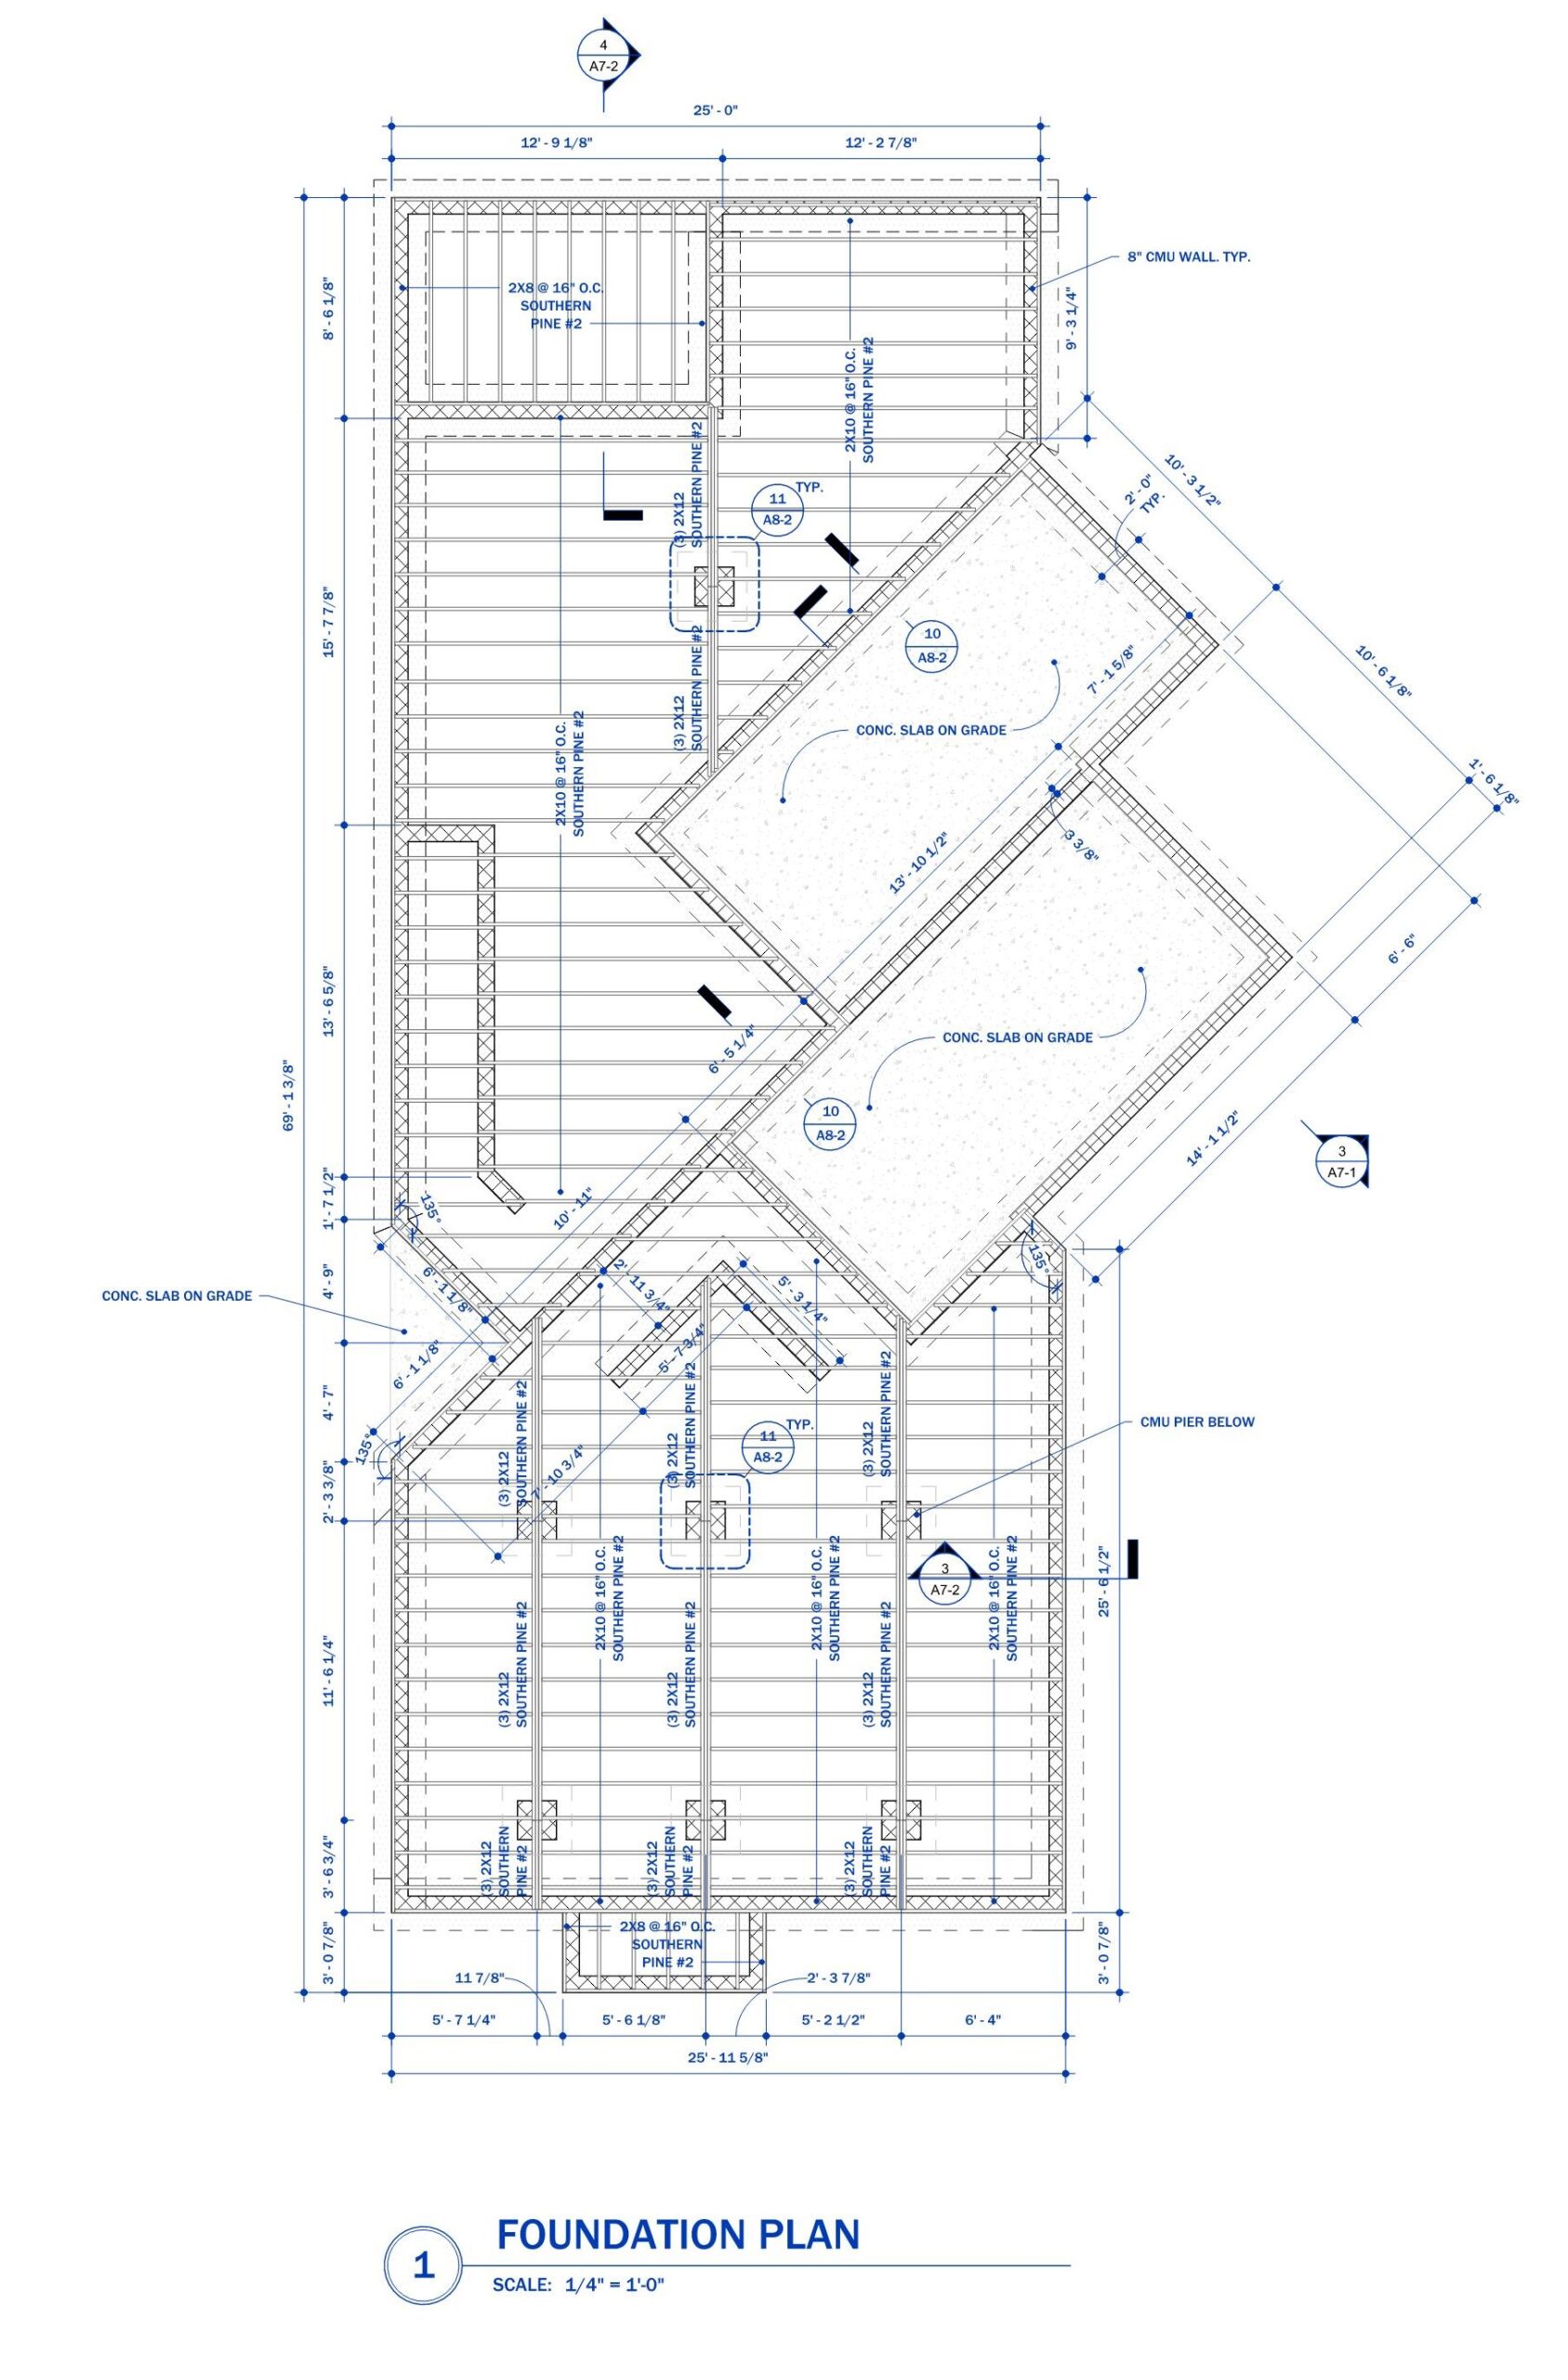 Structural framing foundation plan – Ladd St Duplex